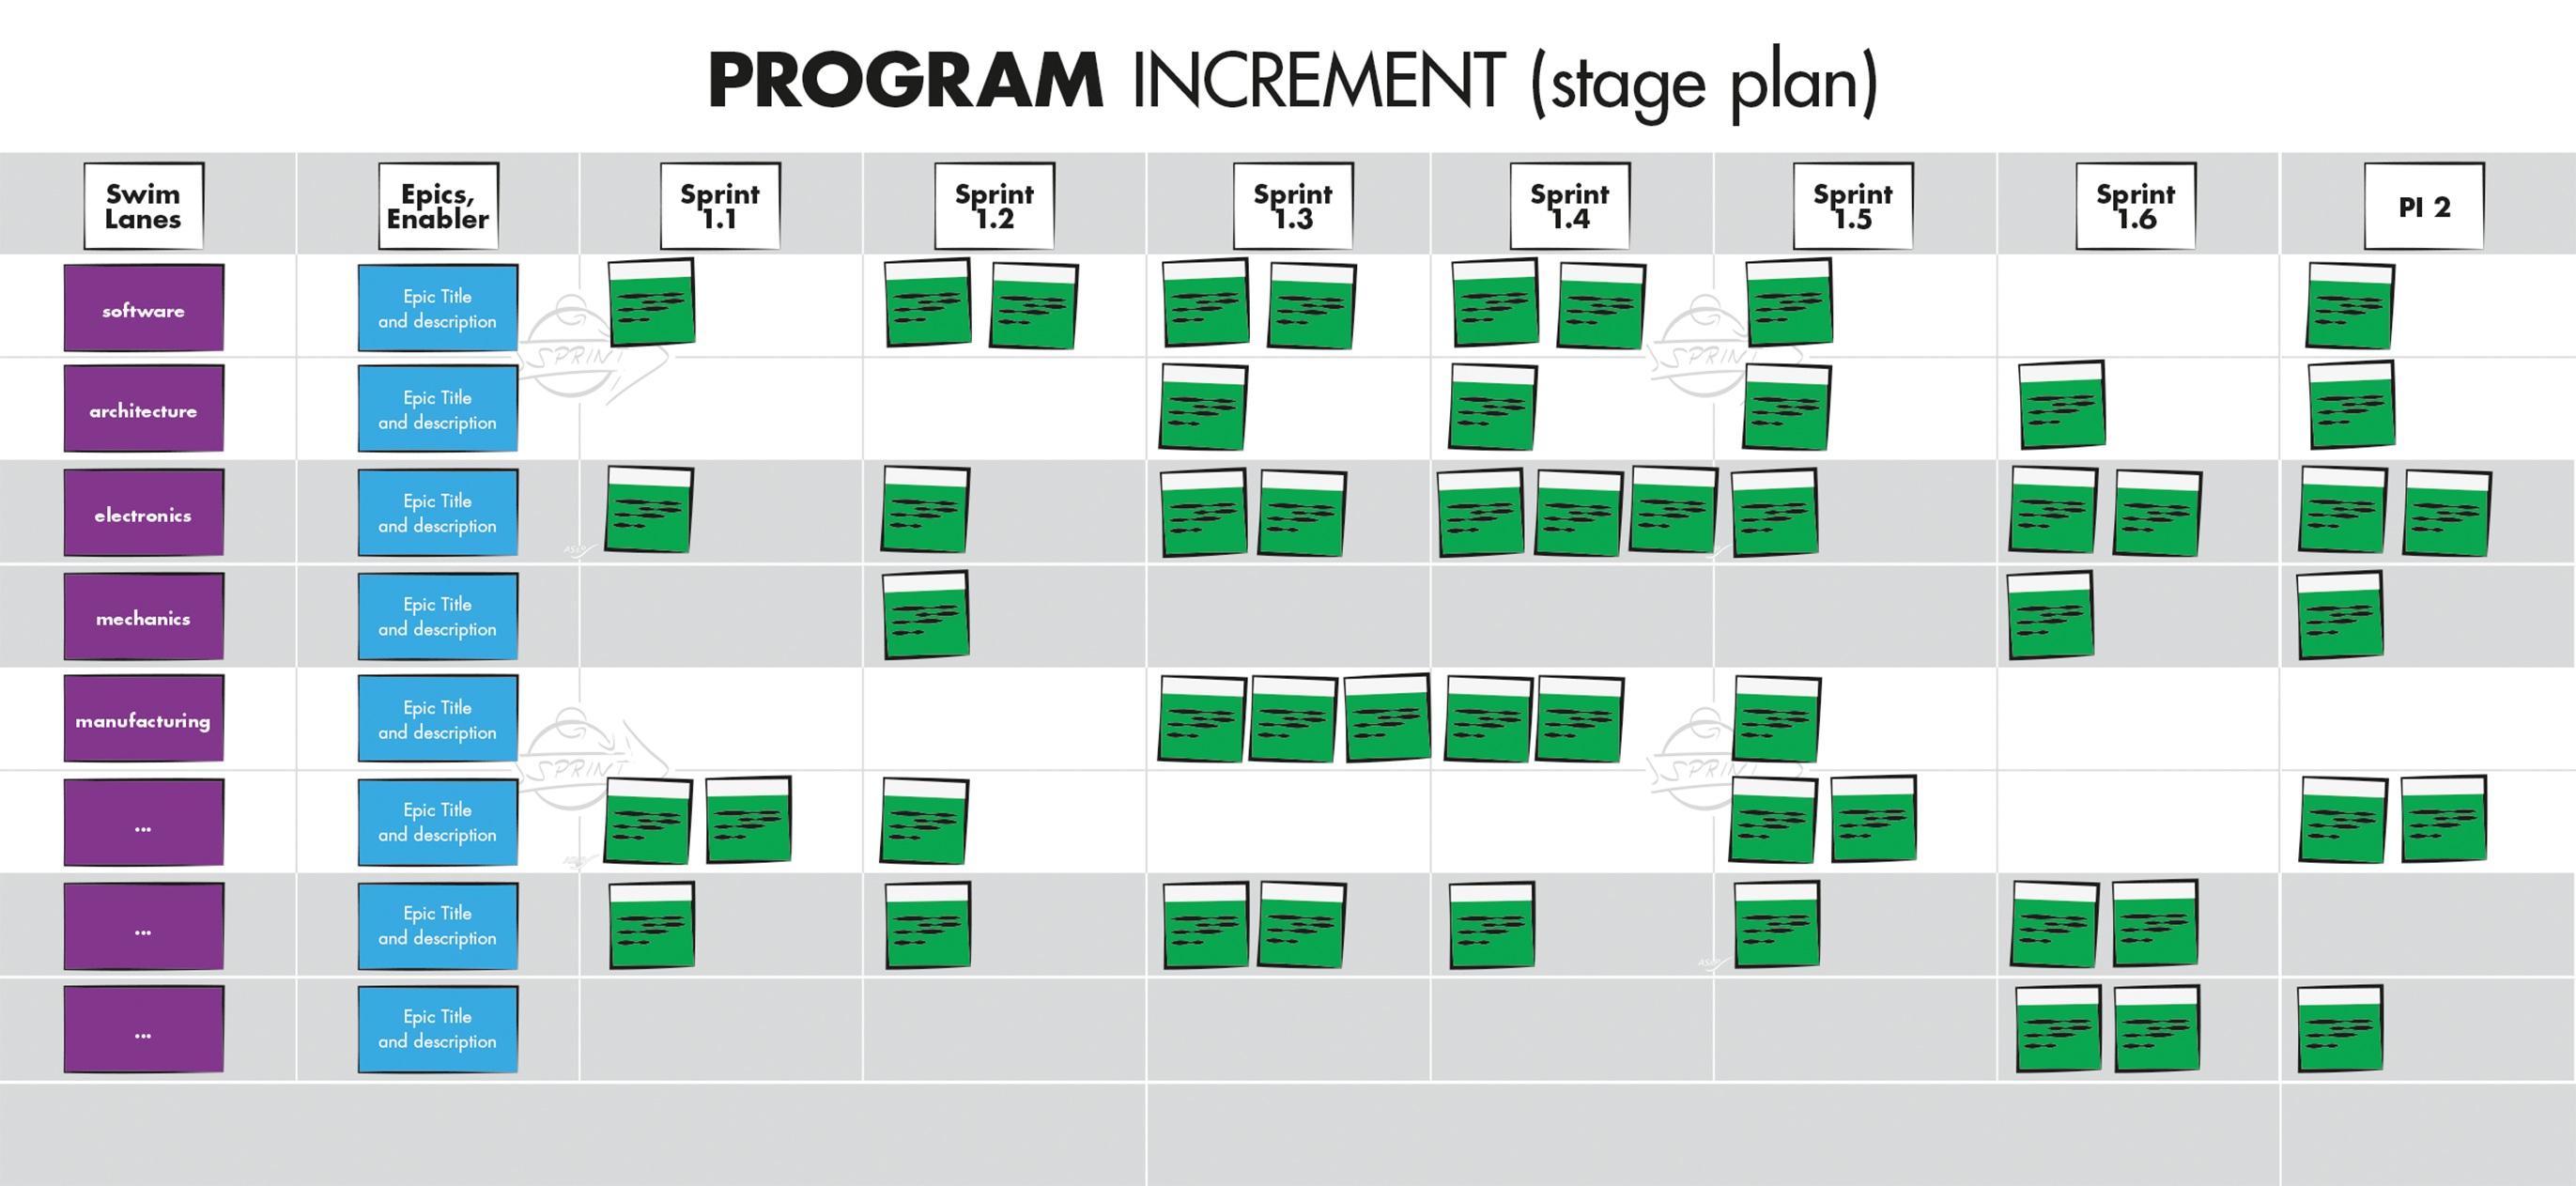 Program Increment Satge plan AS P CLIPART